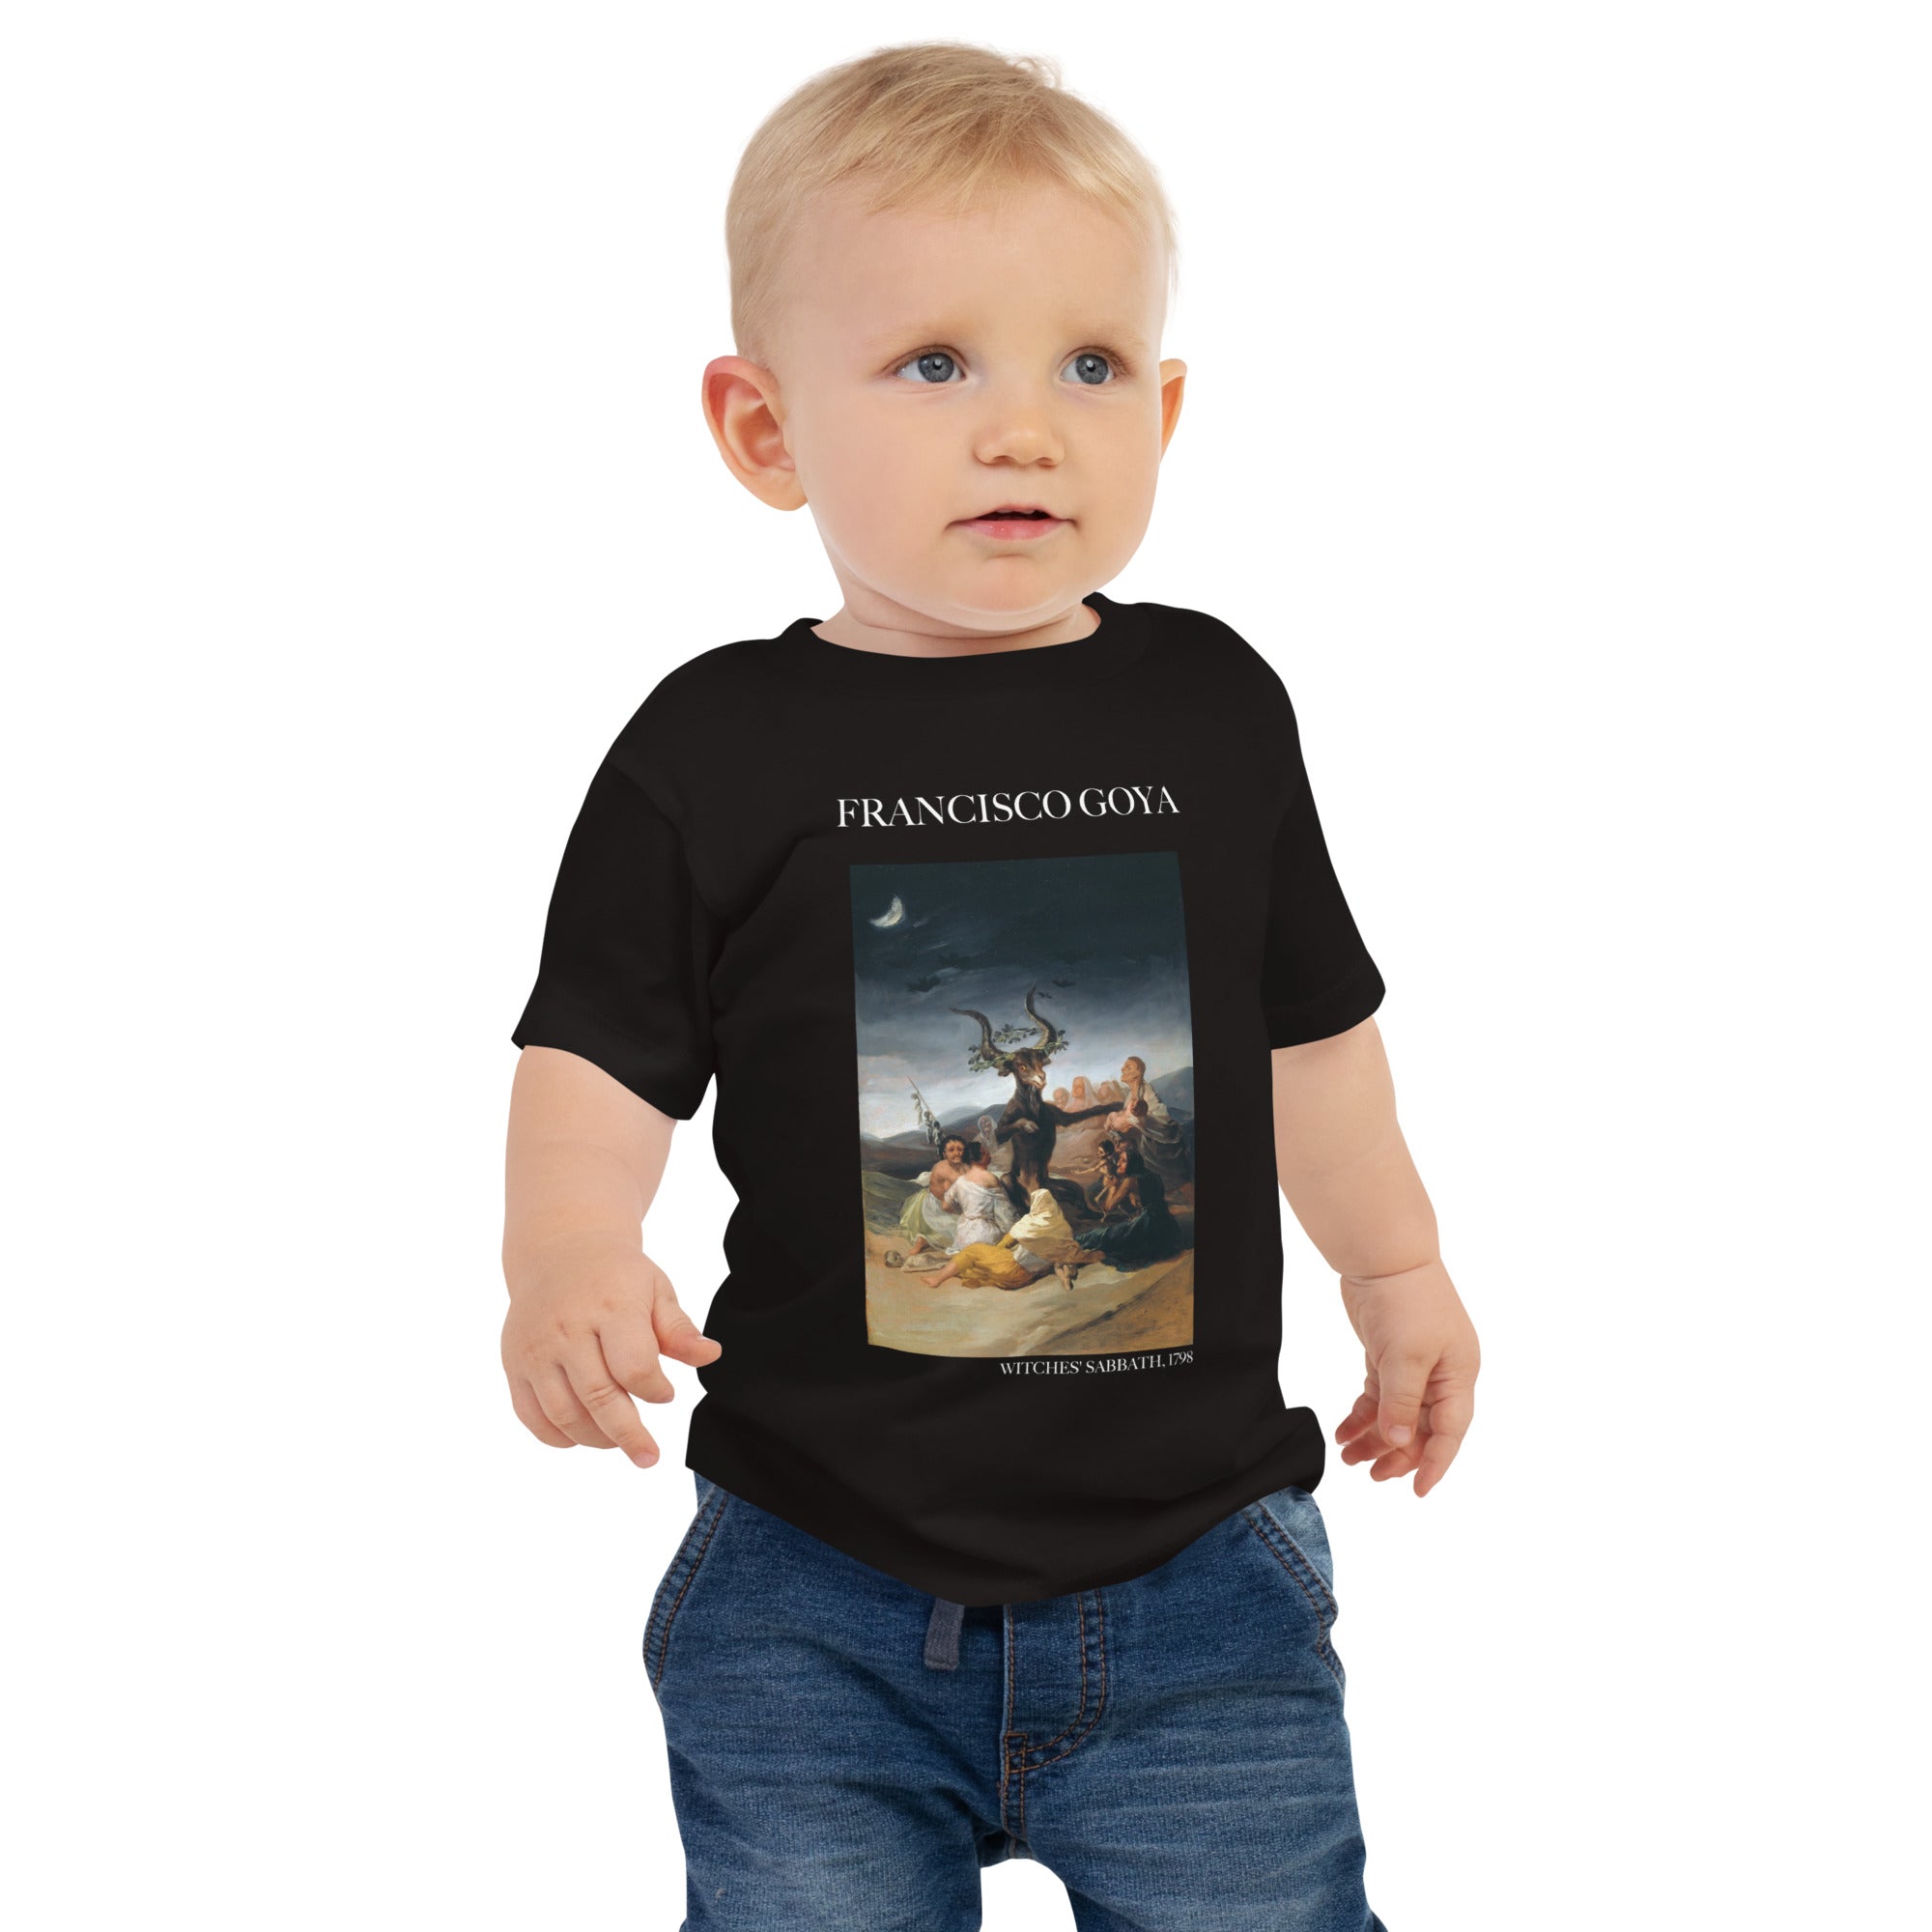 Francisco Goya 'Witches' Sabbath' Famous Painting Baby Staple T-Shirt | Premium Baby Art Tee